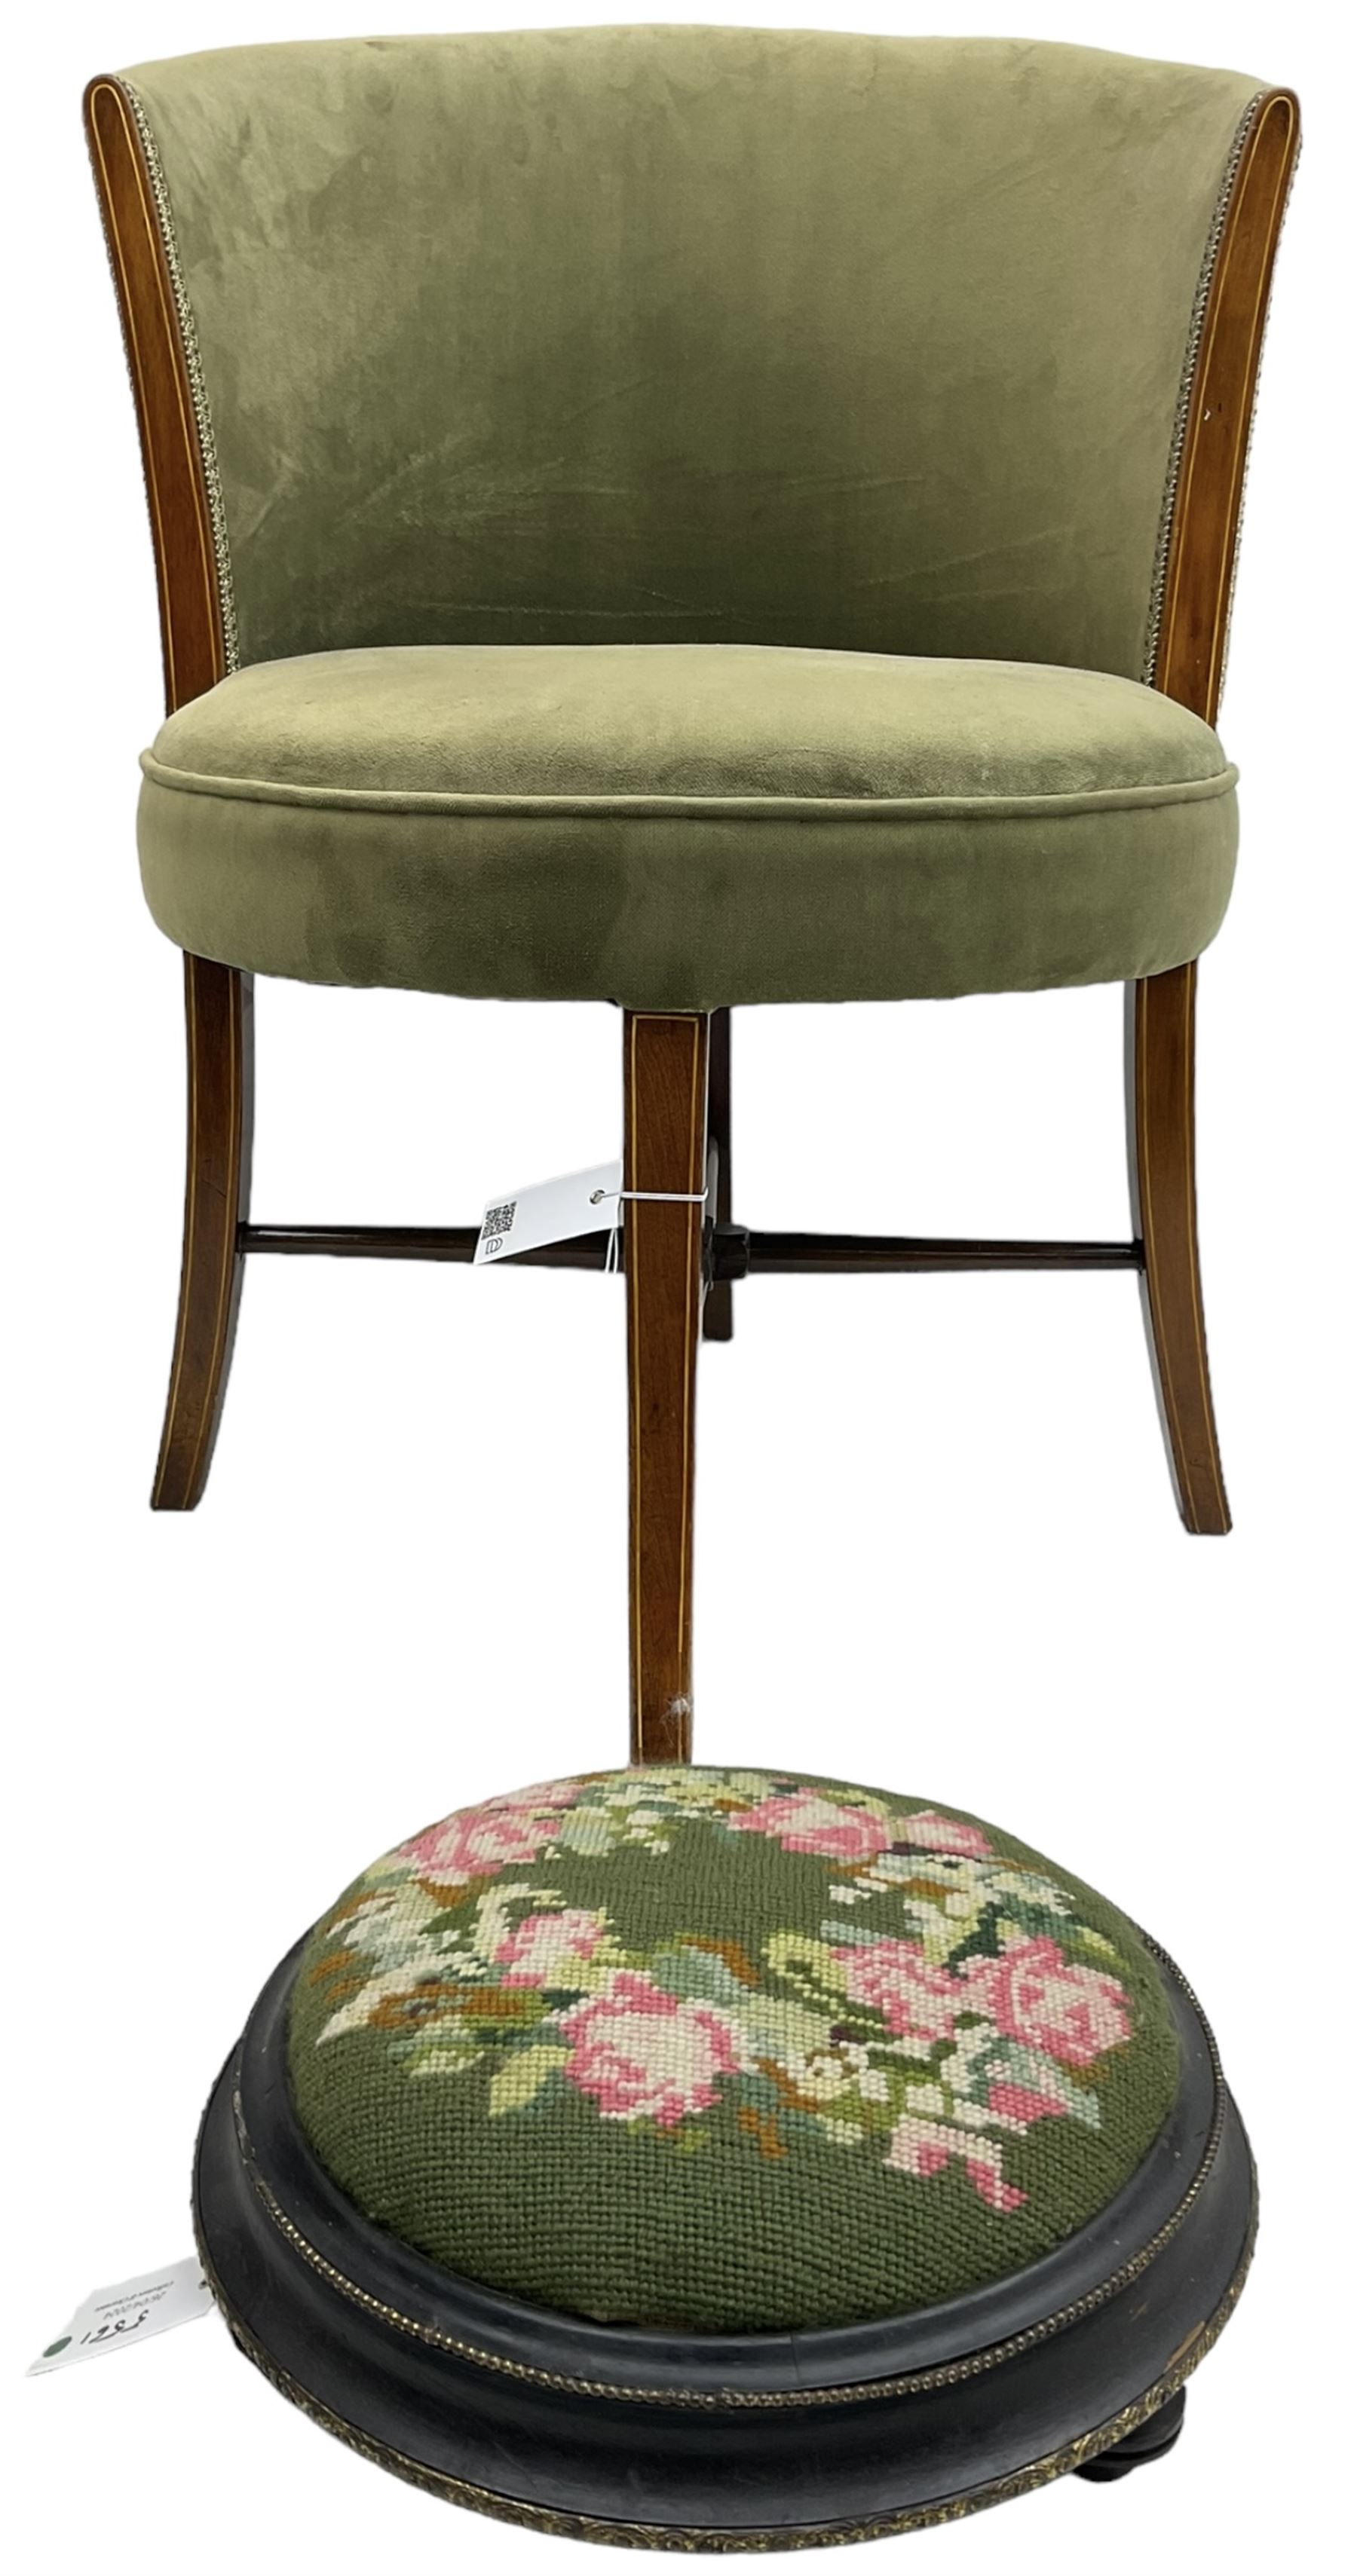 Edwardian mahogany framed tub-shaped chair (W53cm - Image 2 of 2